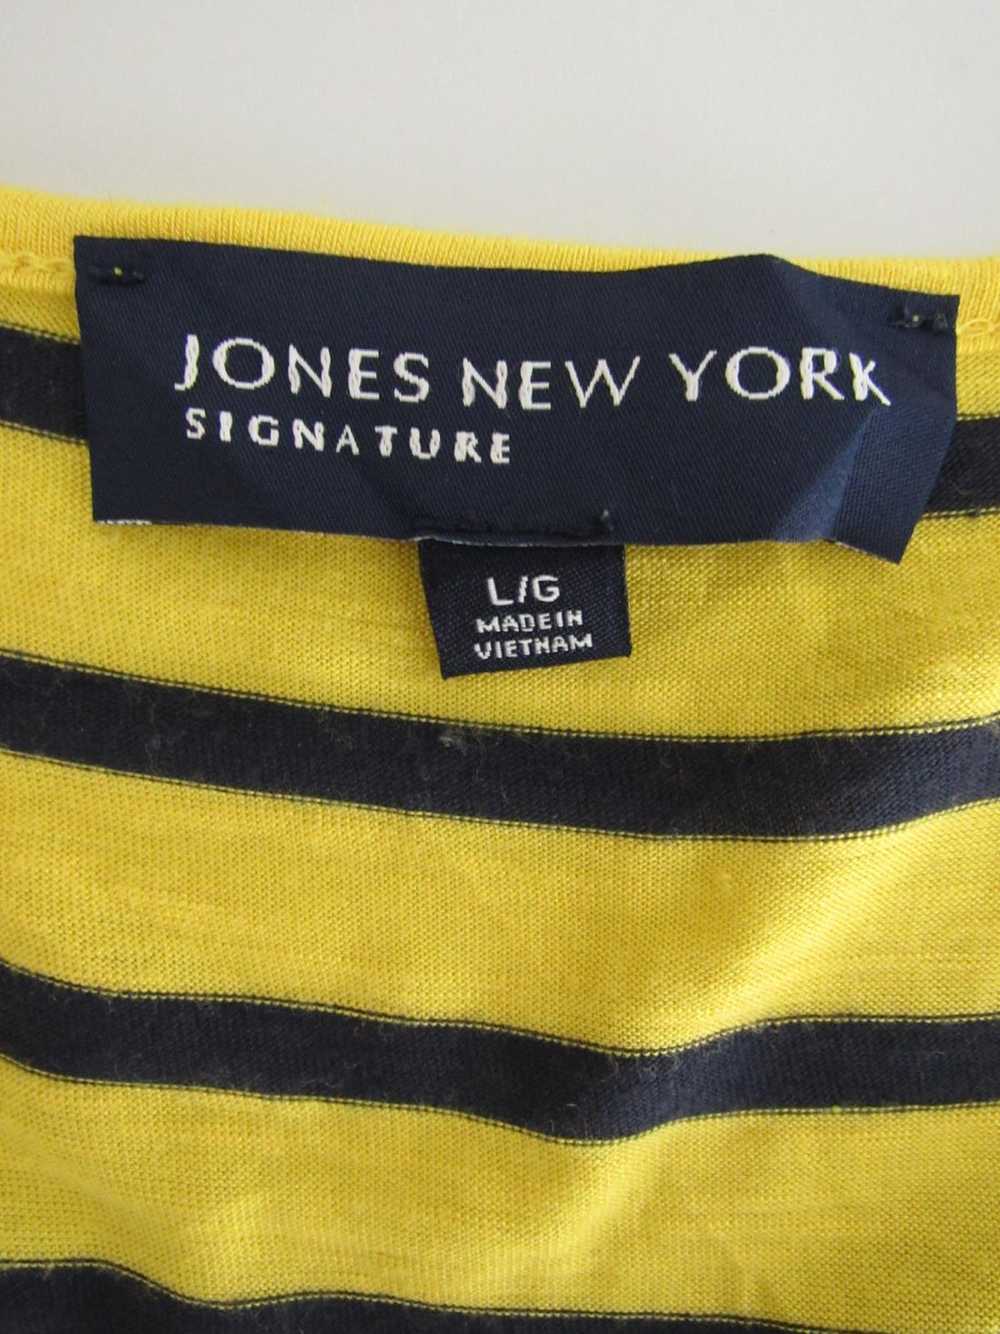 Jones New York T-Shirt Top - image 3